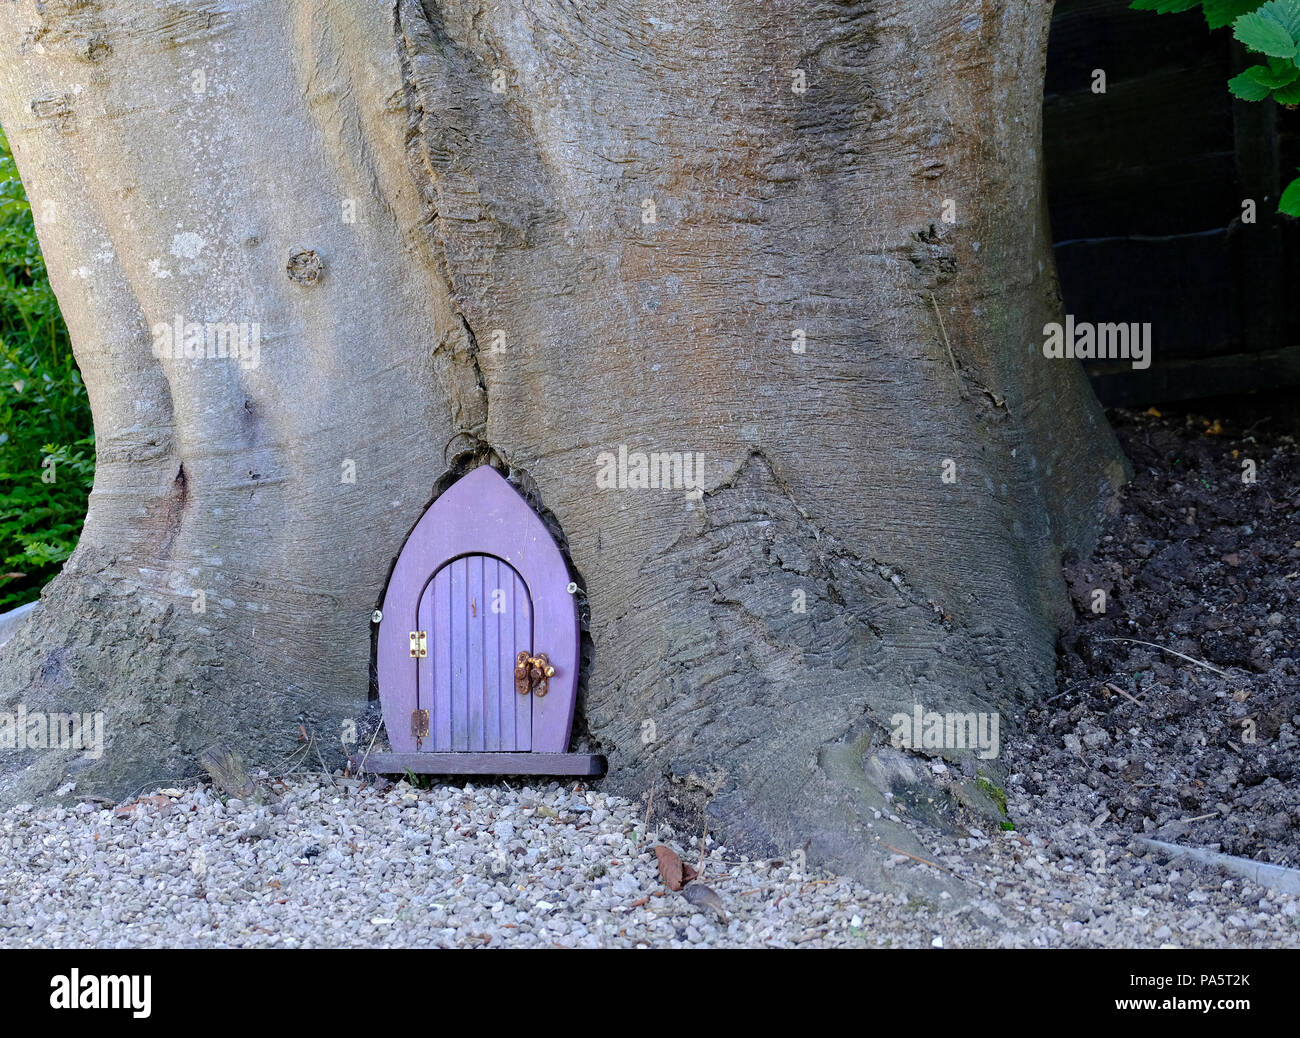 Tiny Faerie door at base of tree Stock Photo